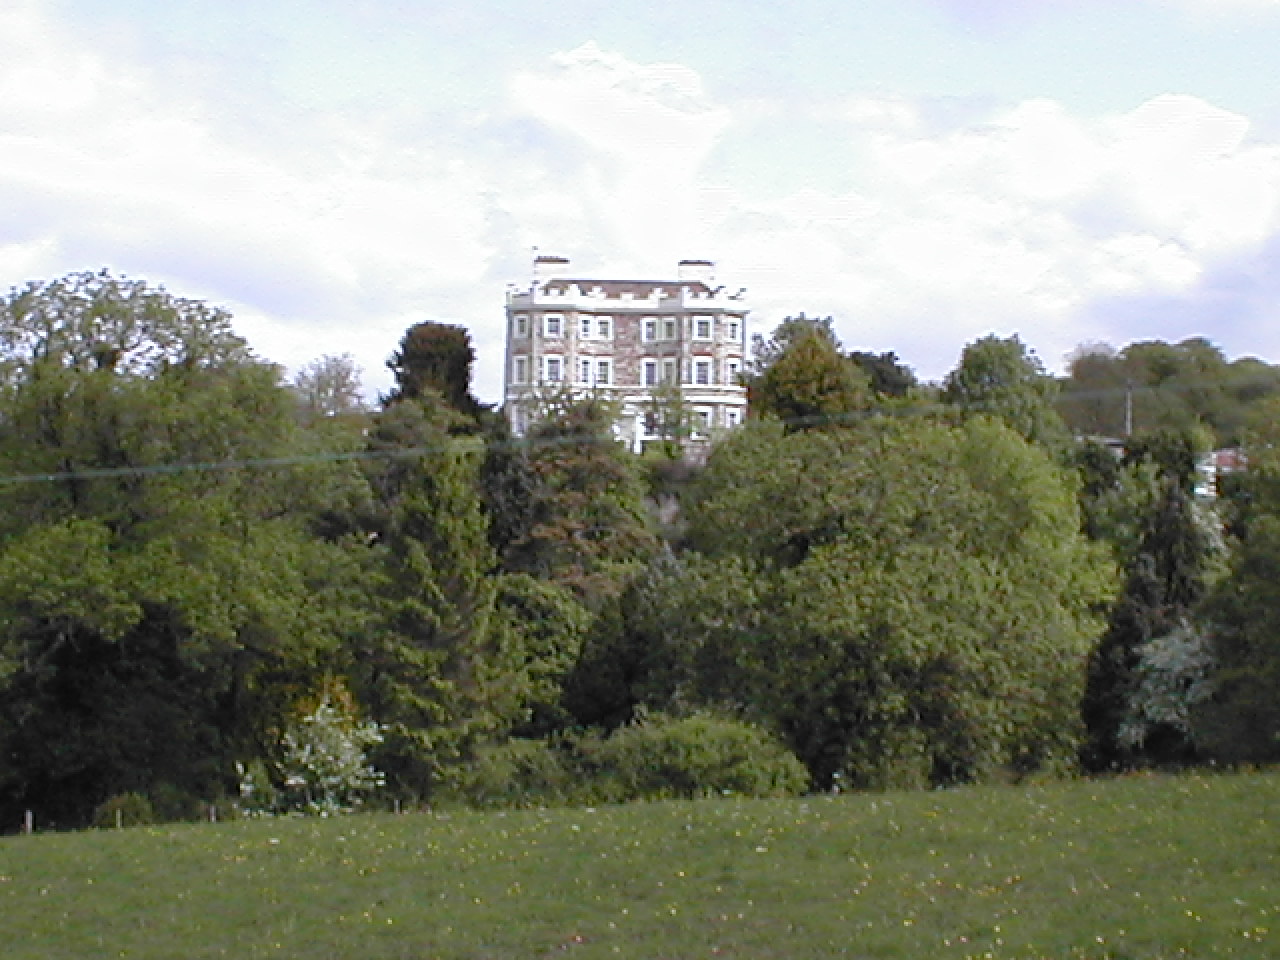 Bury Manor